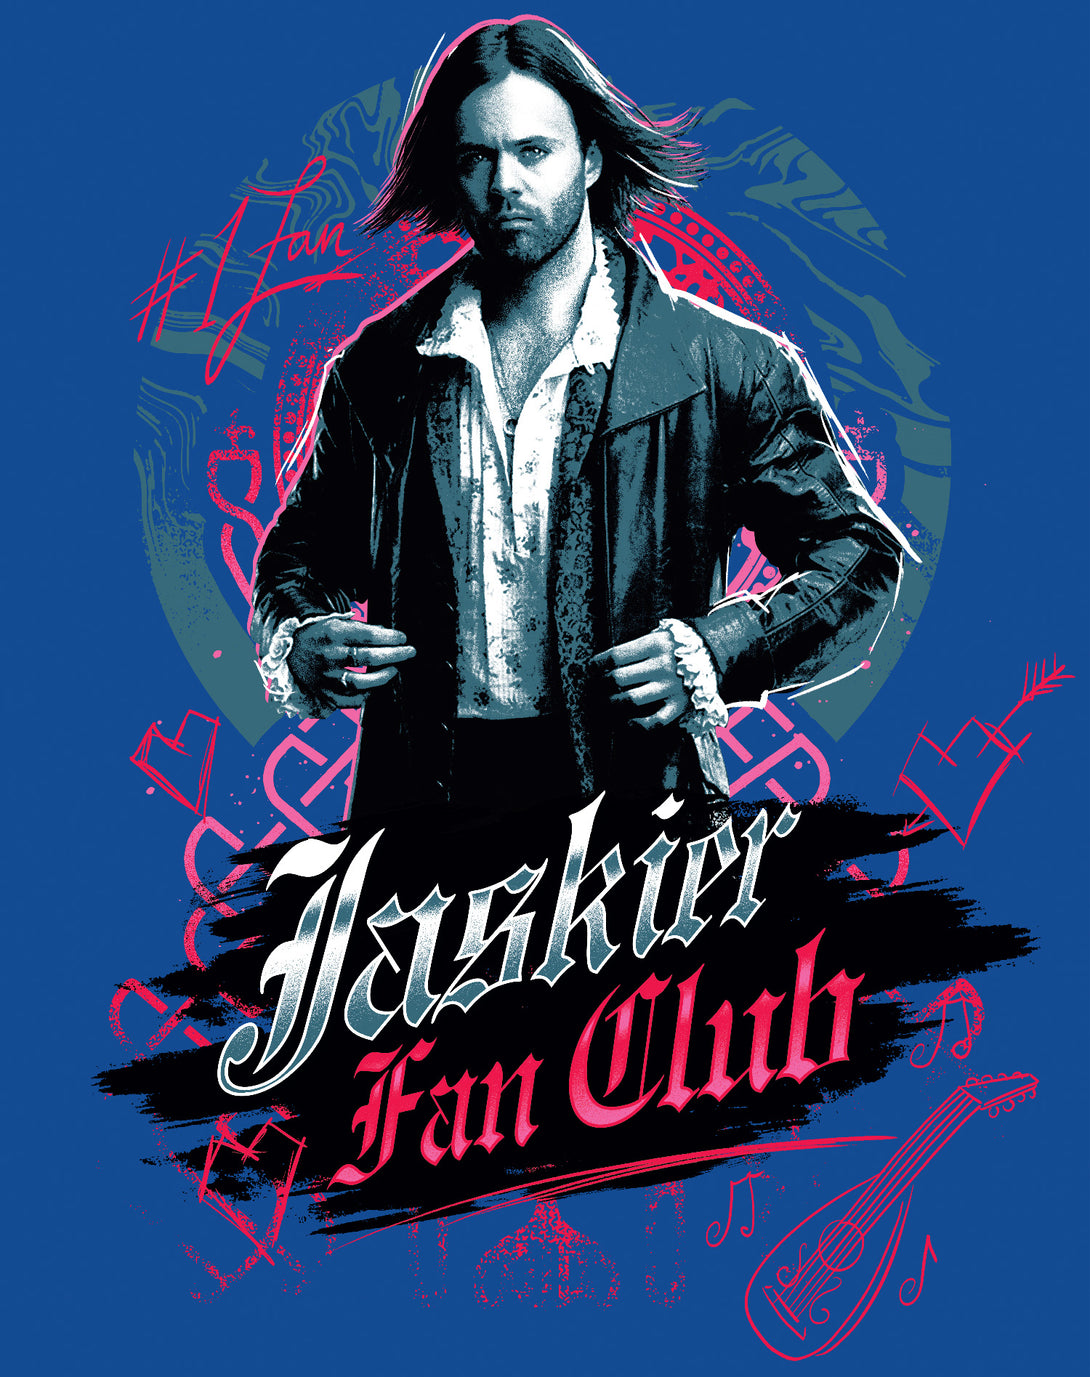 The Witcher Jaskier Splash Fan Club Official Men's T-Shirt Blue - Urban Species Design Close Up